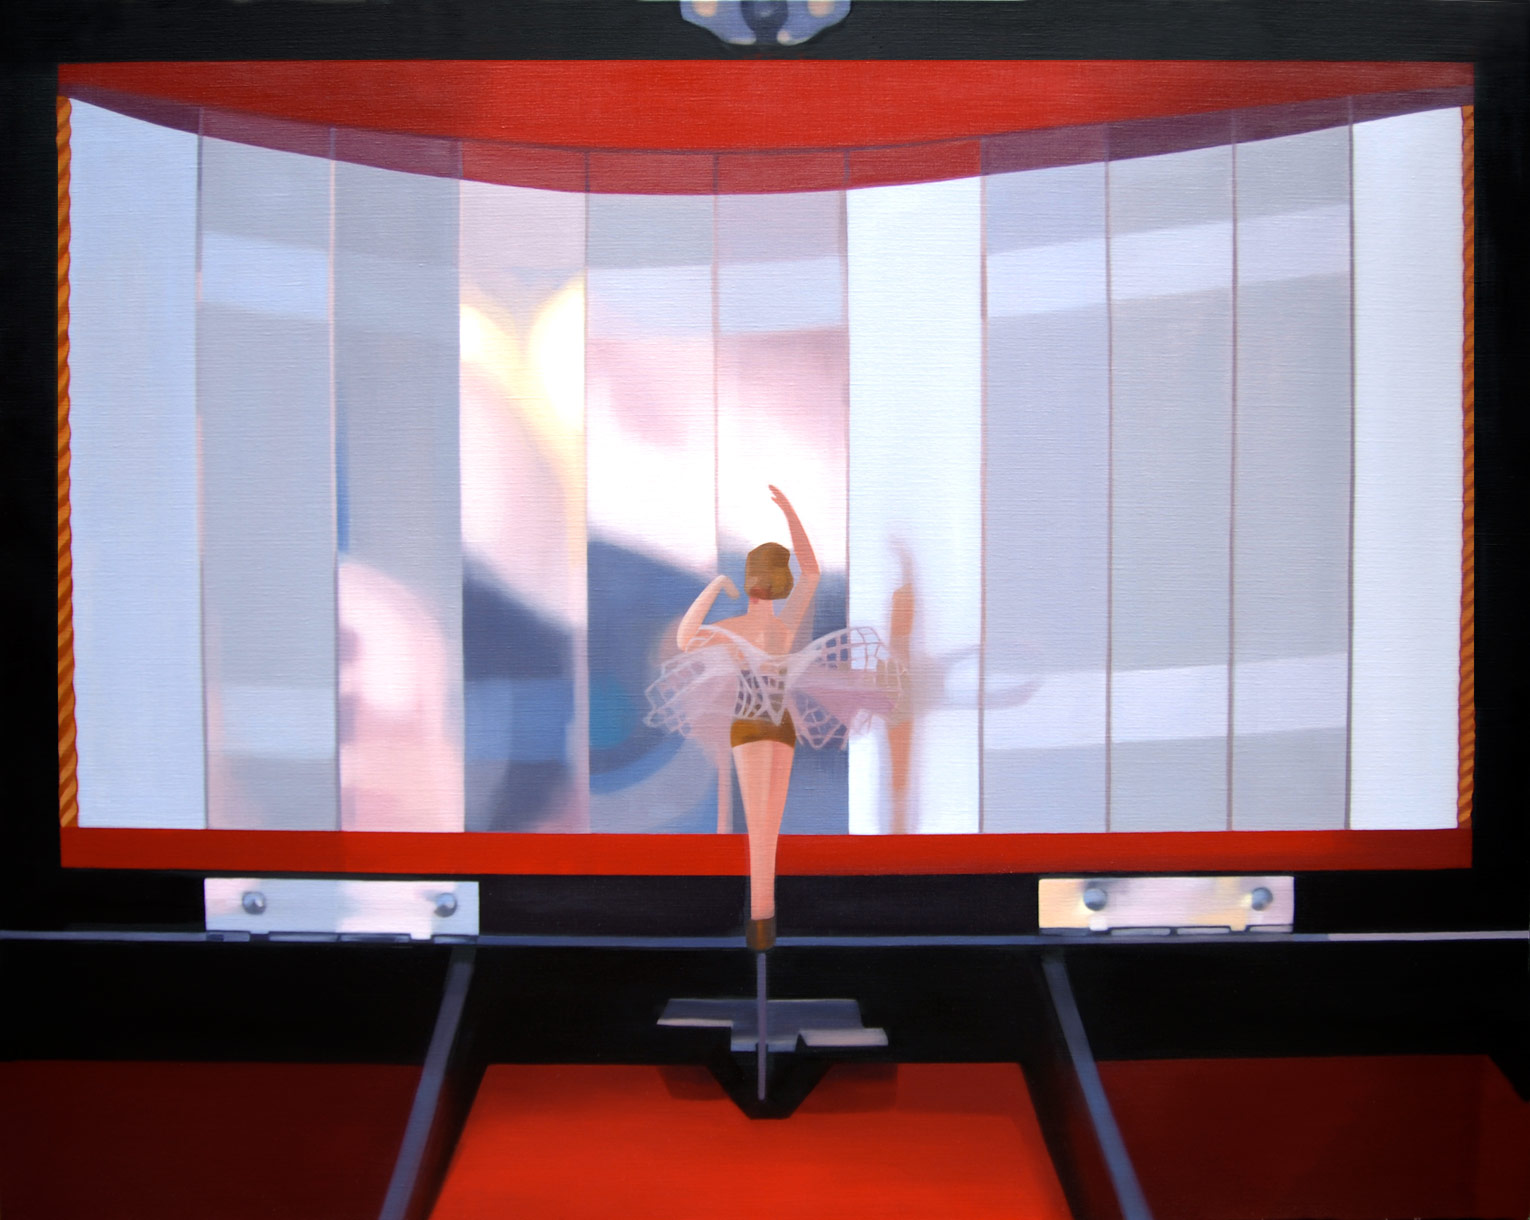 Christina Skårud, Private dancer, 2012, Oil on canvas, 120 x 150 cm